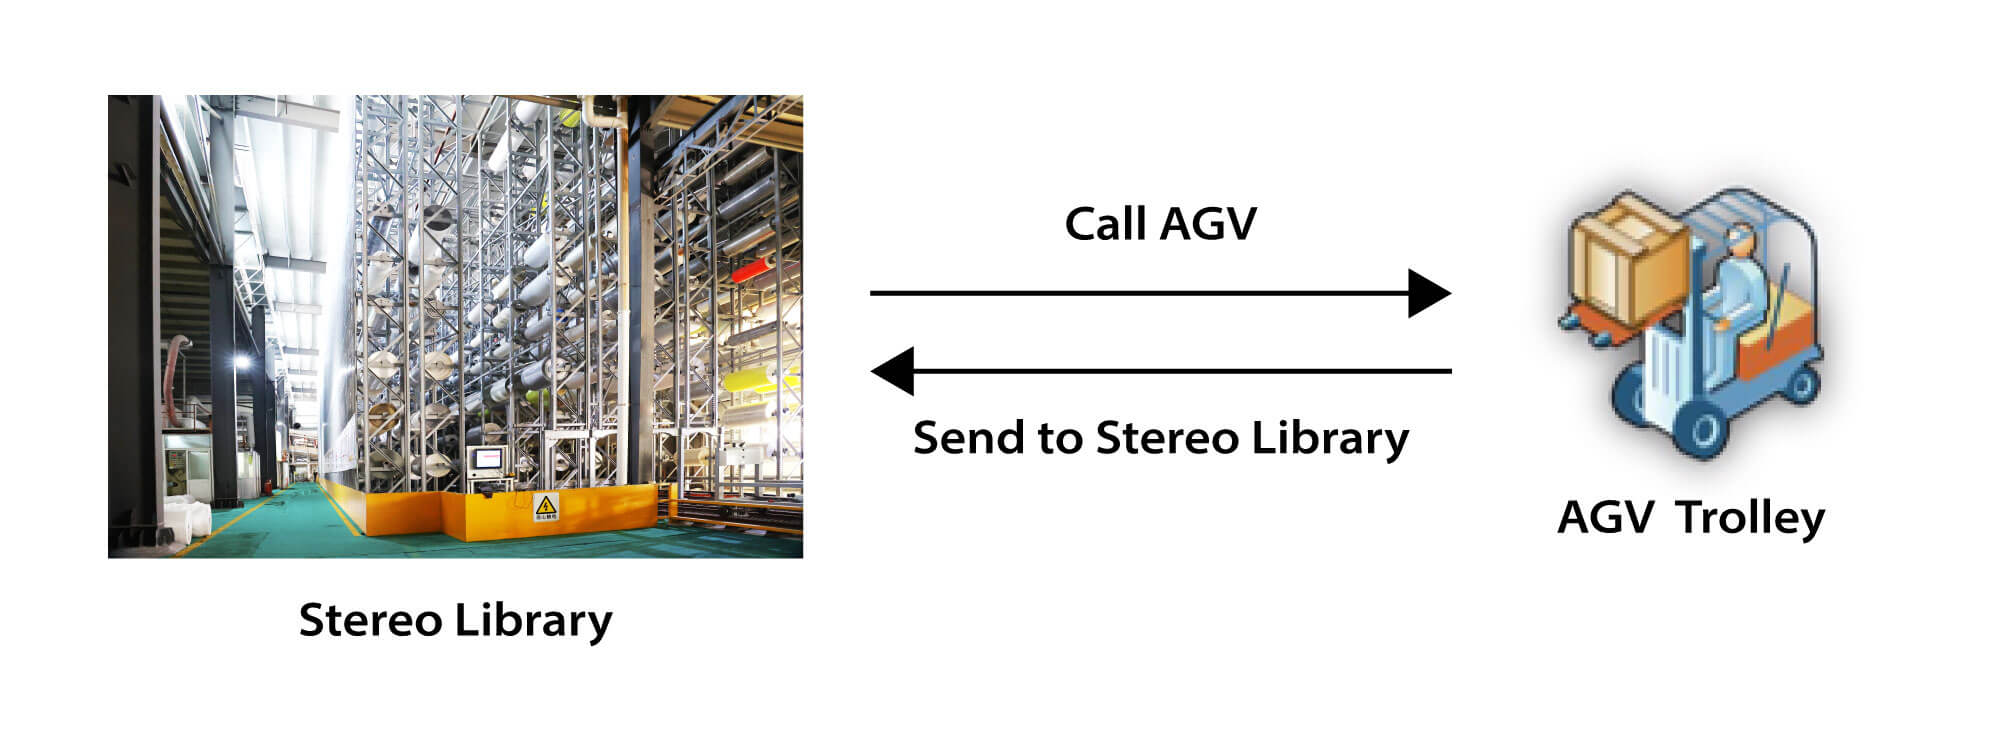 AGV of YGM Digital Factory